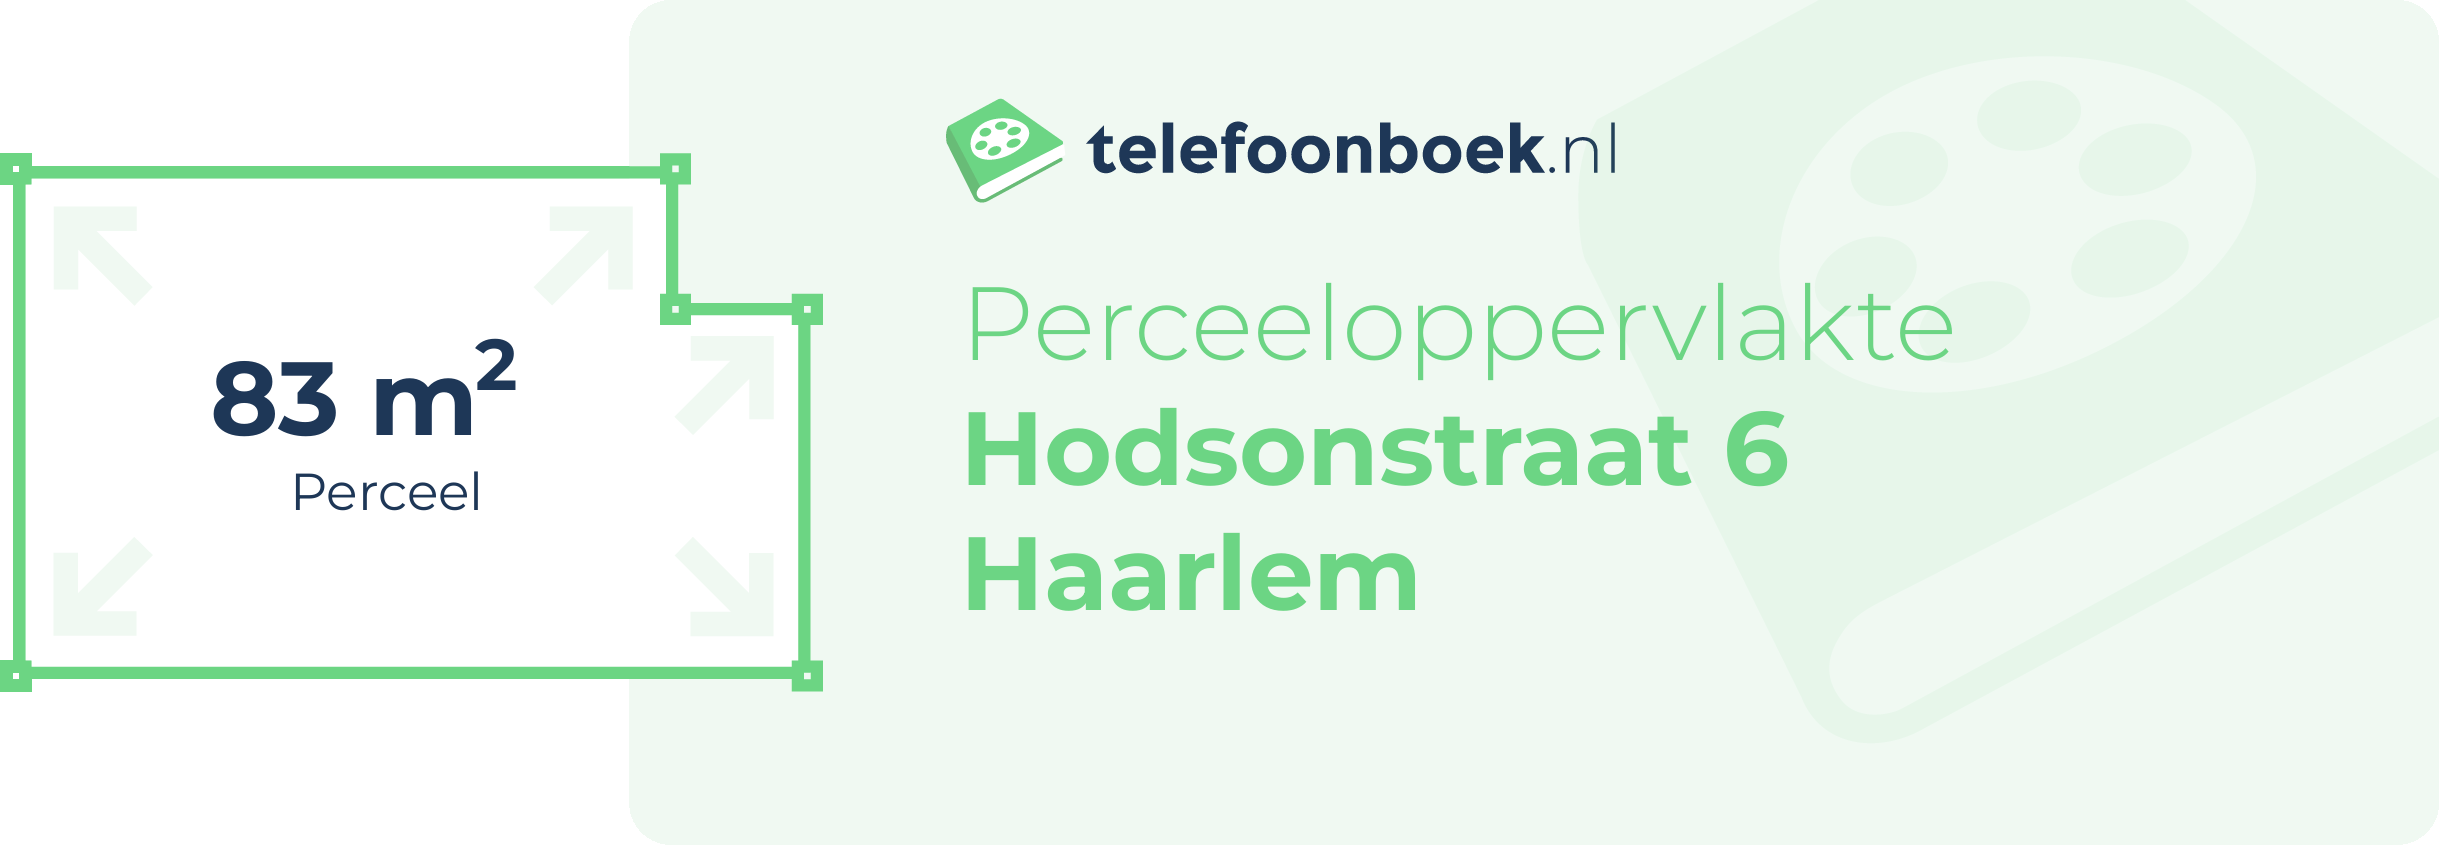 Perceeloppervlakte Hodsonstraat 6 Haarlem